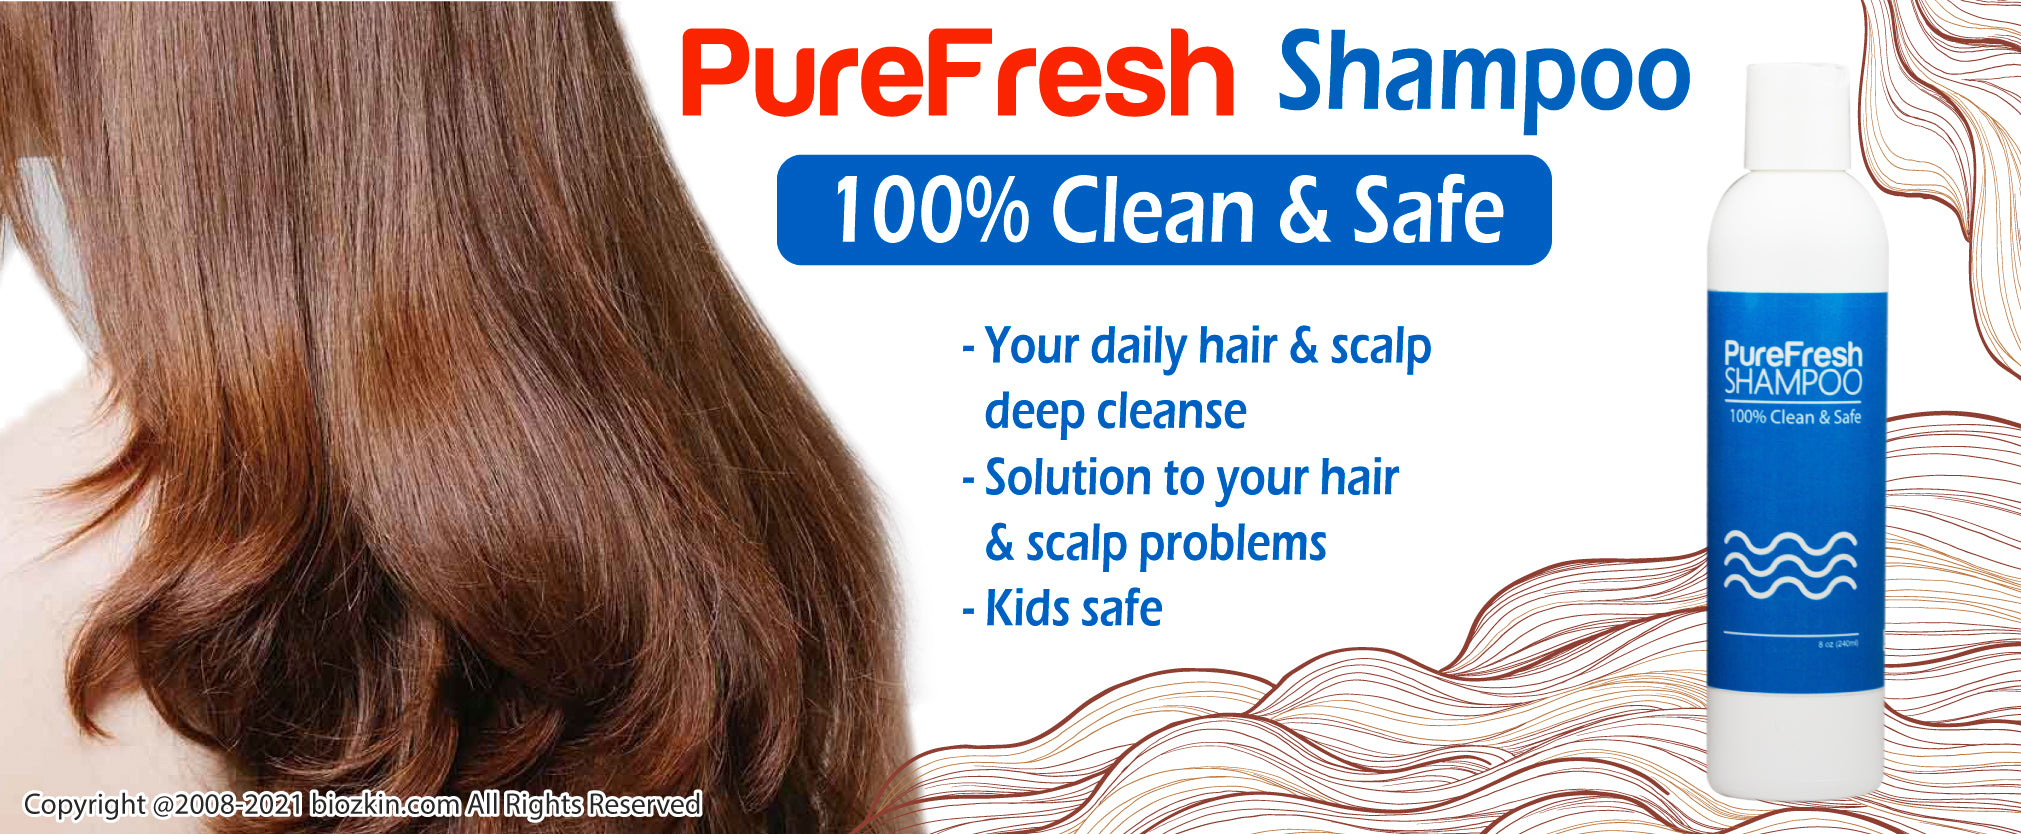 PureFresh Shampoo